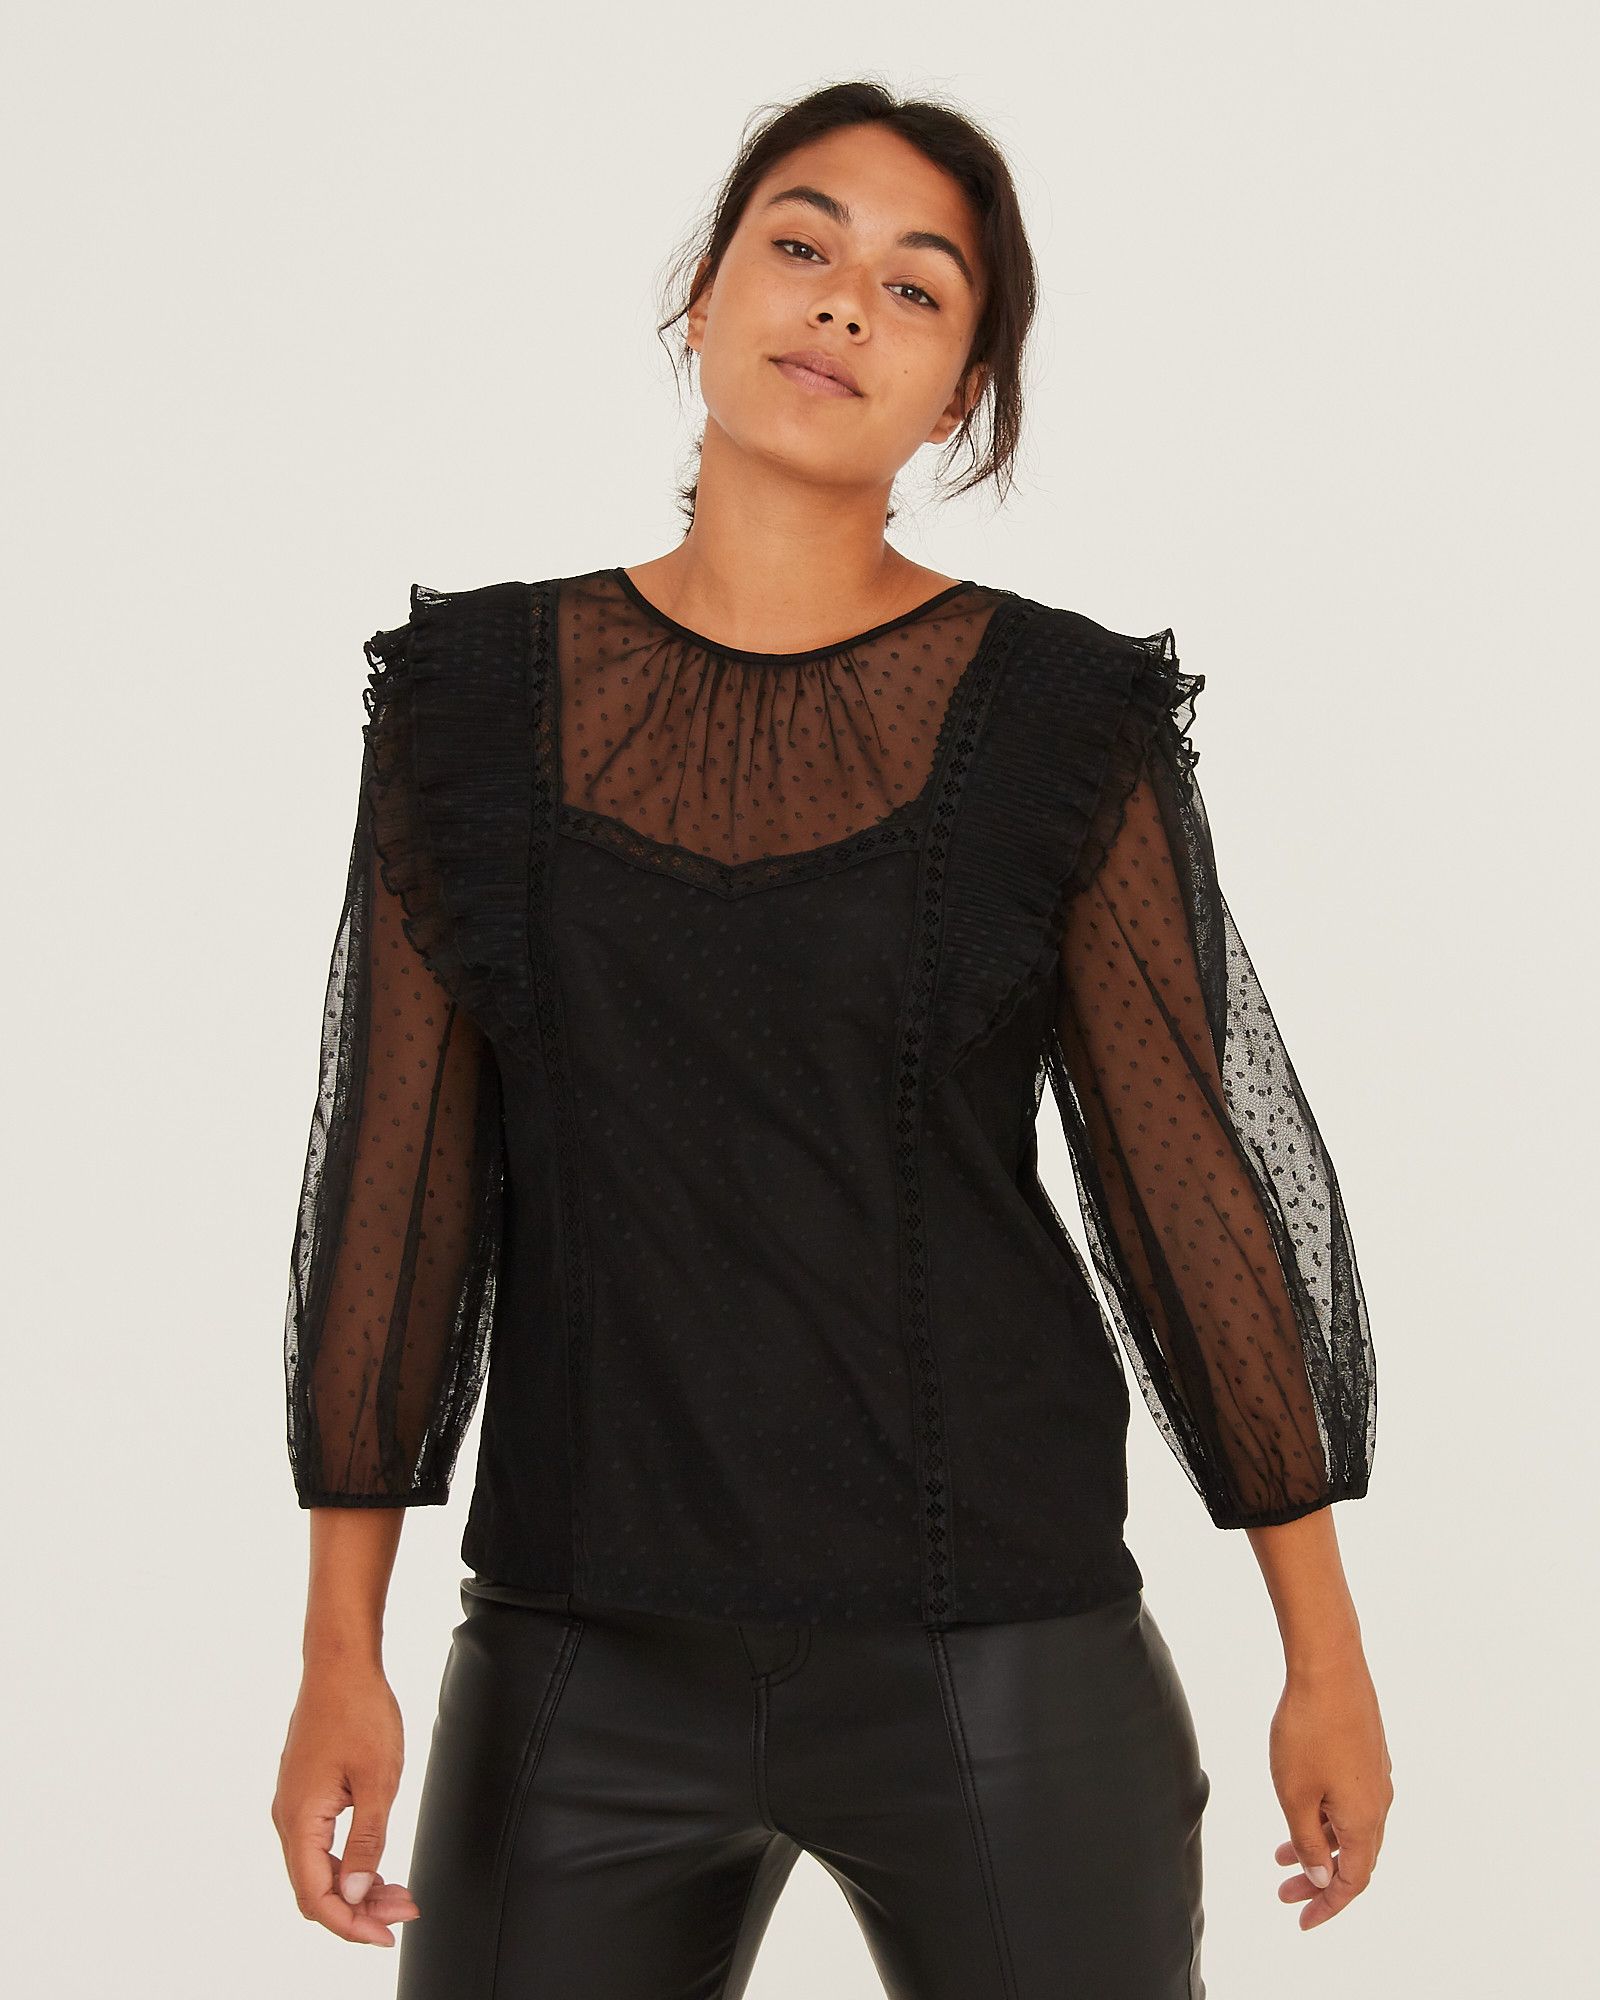 Oliver Bonas Women Frill & Lace Insert Sheer Black Blouse | eBay